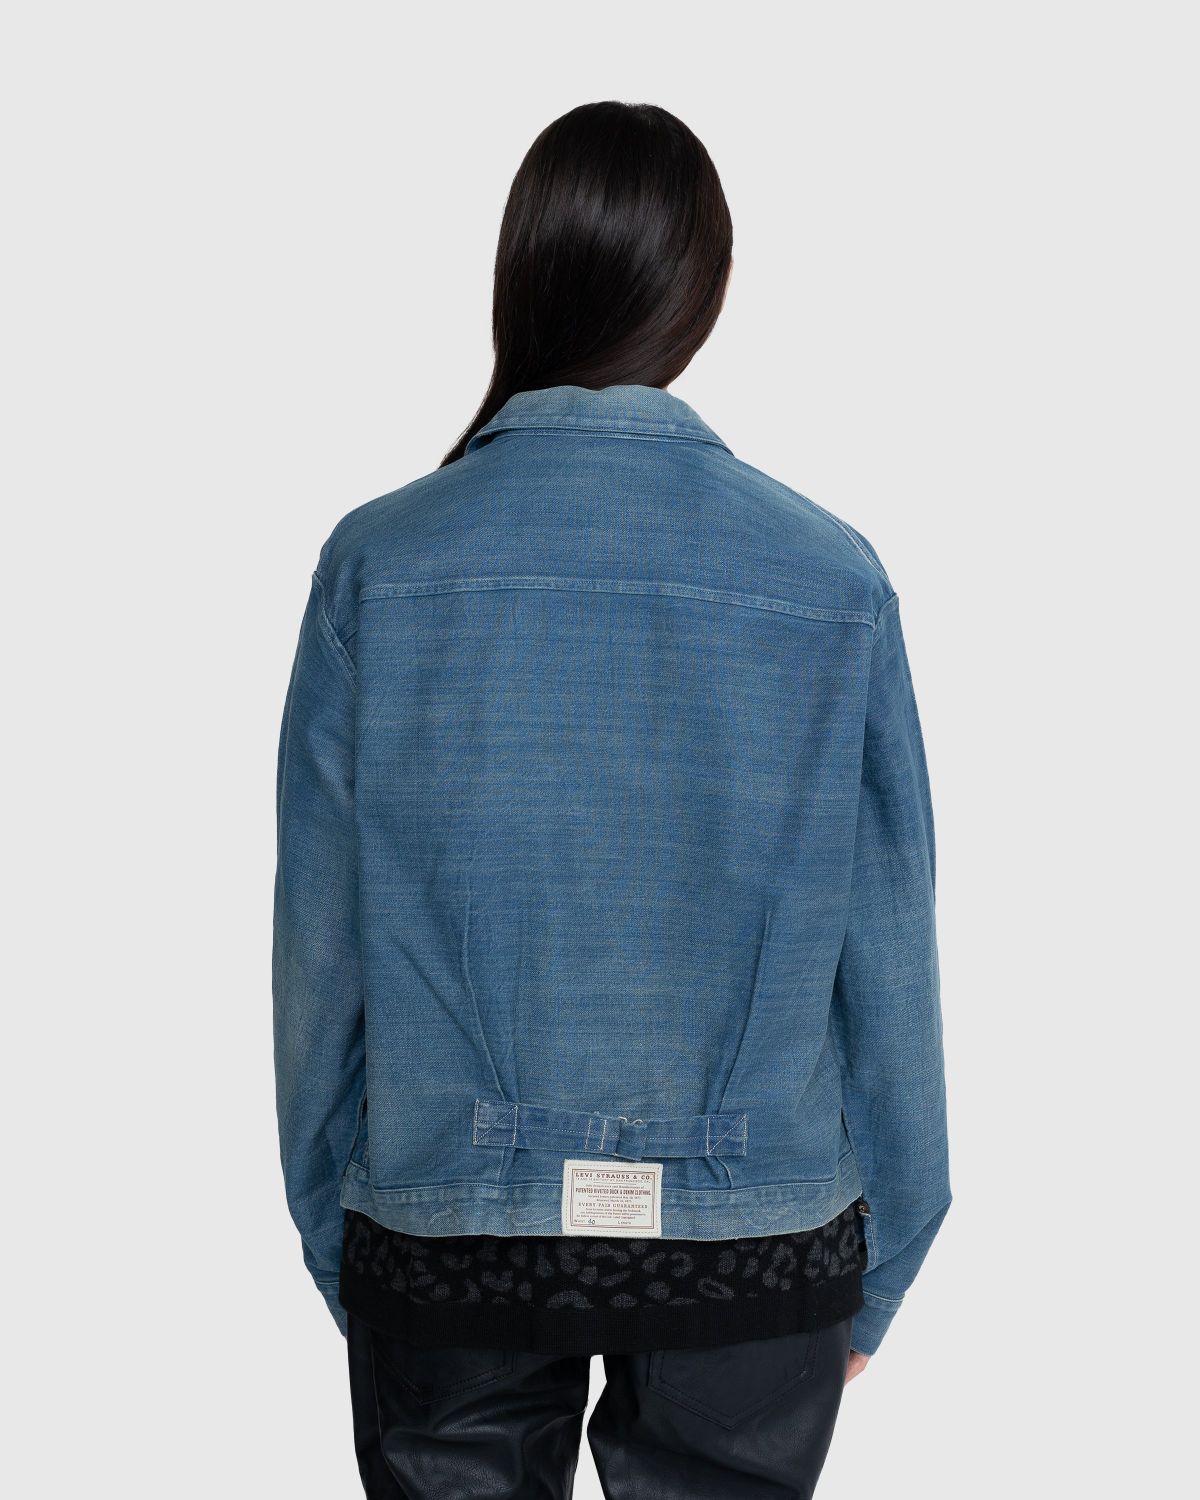 Levi's – LVC 1879 Pleated Blouse Jacket Indigo Blue | Highsnobiety Shop